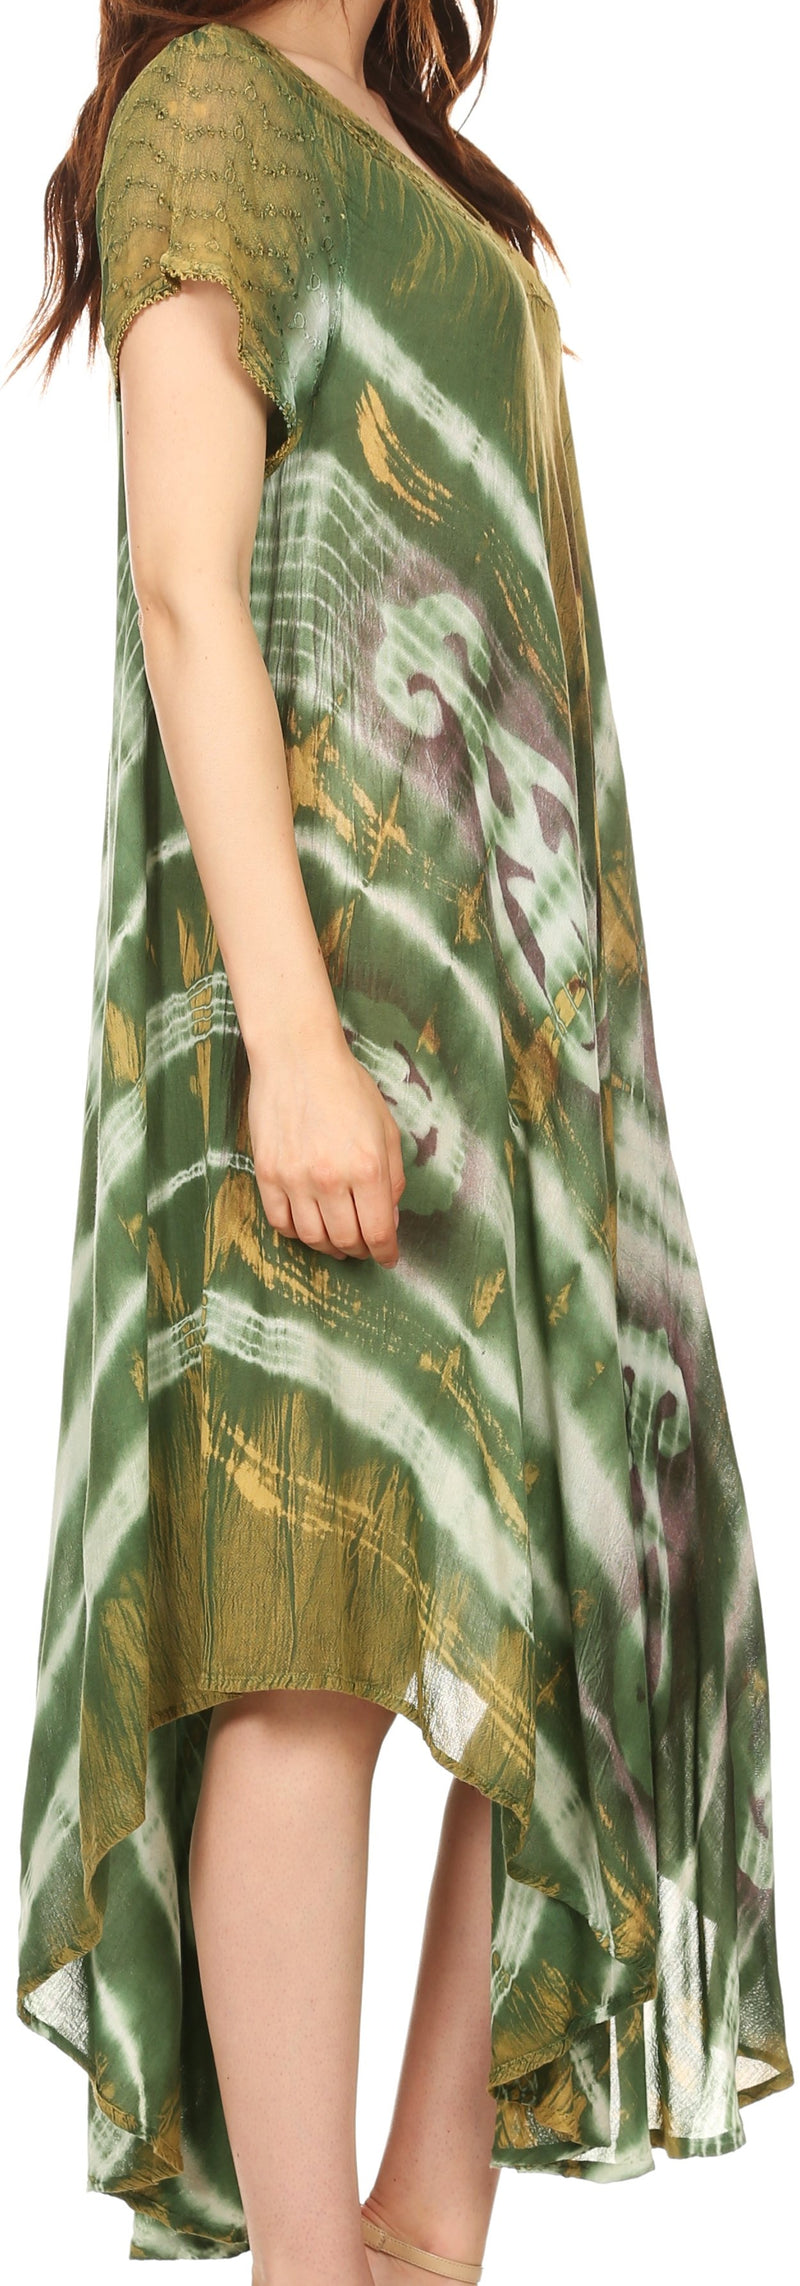 Sakkas Rachelle Short Sleeve Embroidered Batik Dress